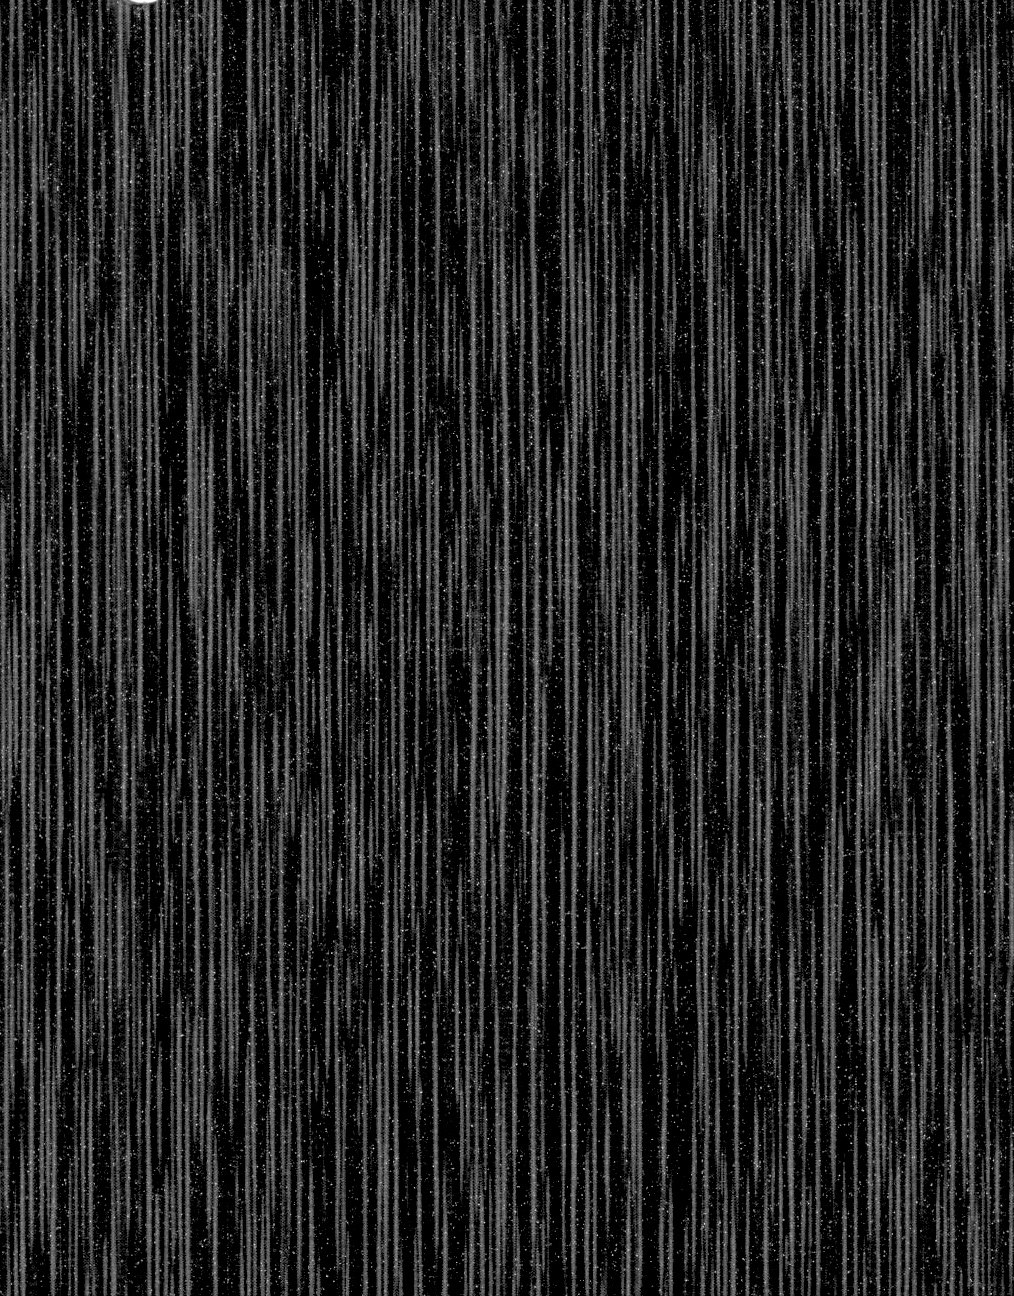 Пленка пвх черная. 7060 Титан черный глянец. Плёнка ПВХ серебряный дождь 2208. Титан черный МДФ. Огни Нью-Йорка пленка ПВХ.